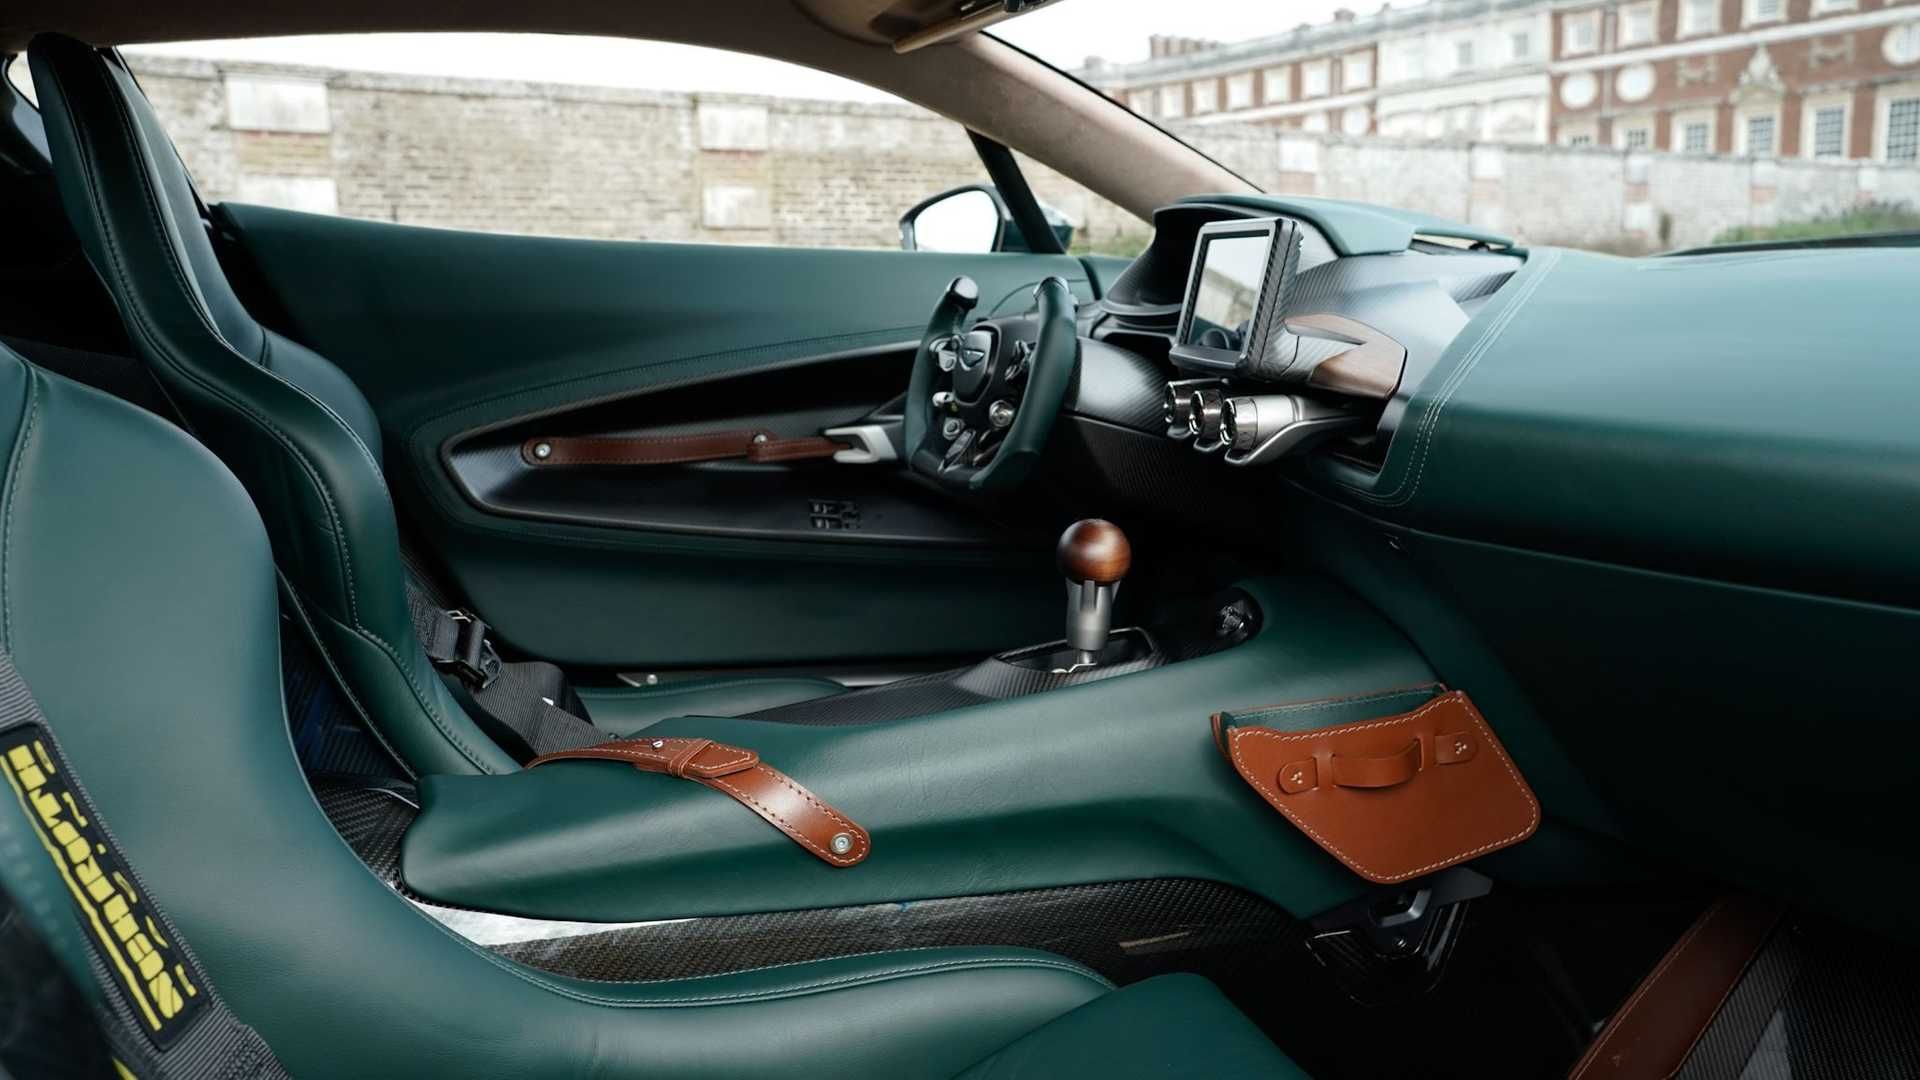 Aston Martin Victor استون مارتین ویکتور